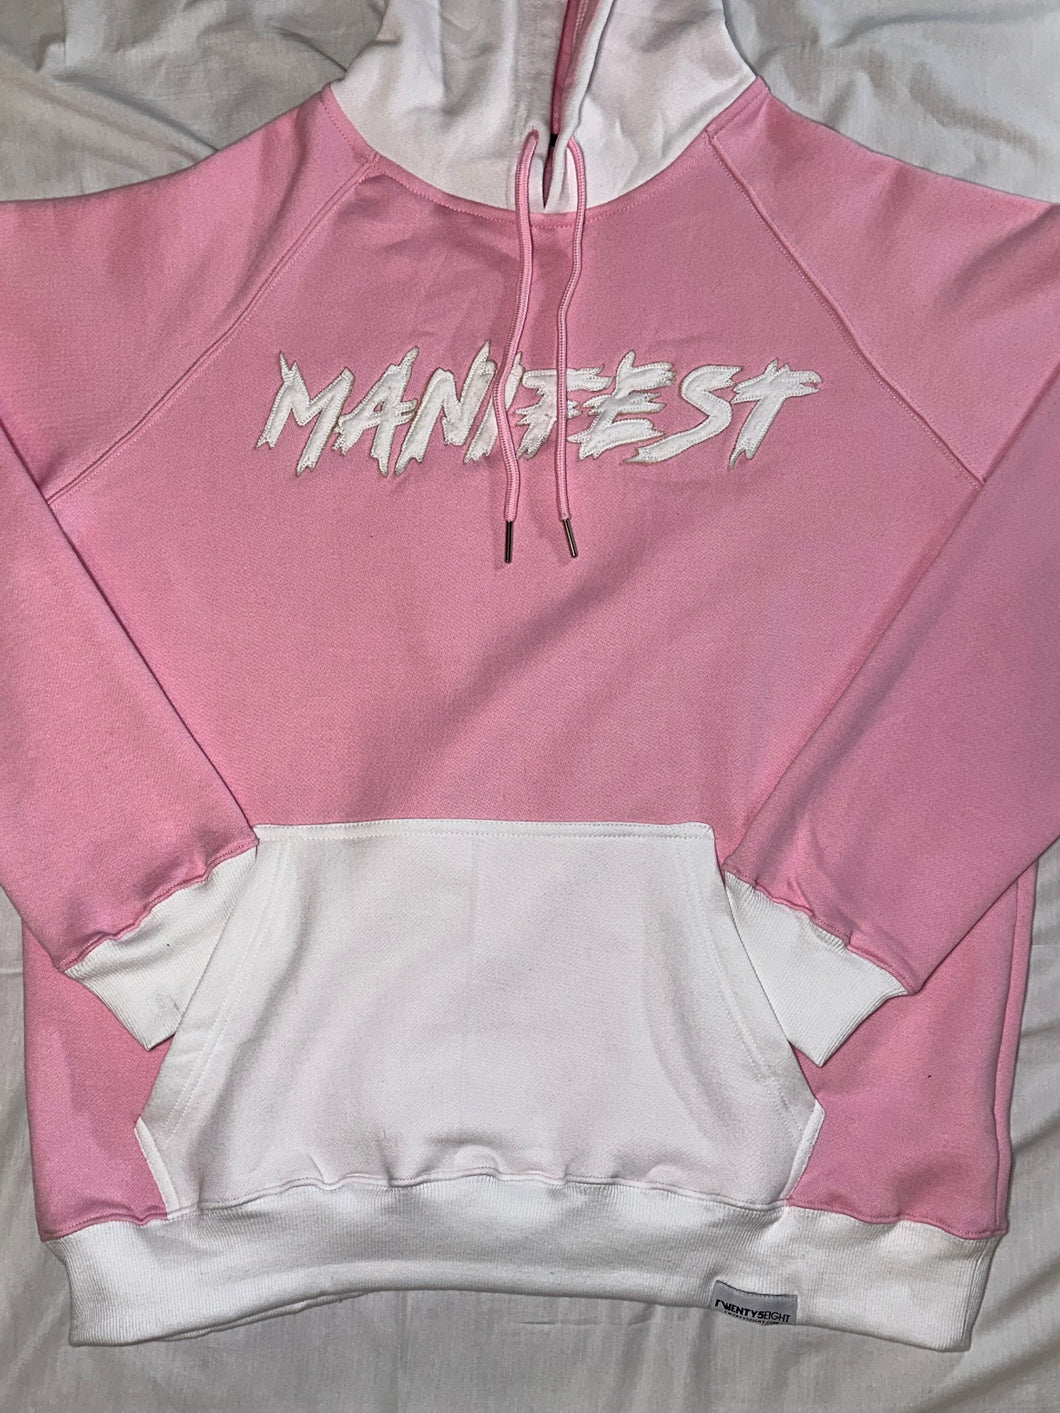 Manifest Embordered Hoodie - Pink & White